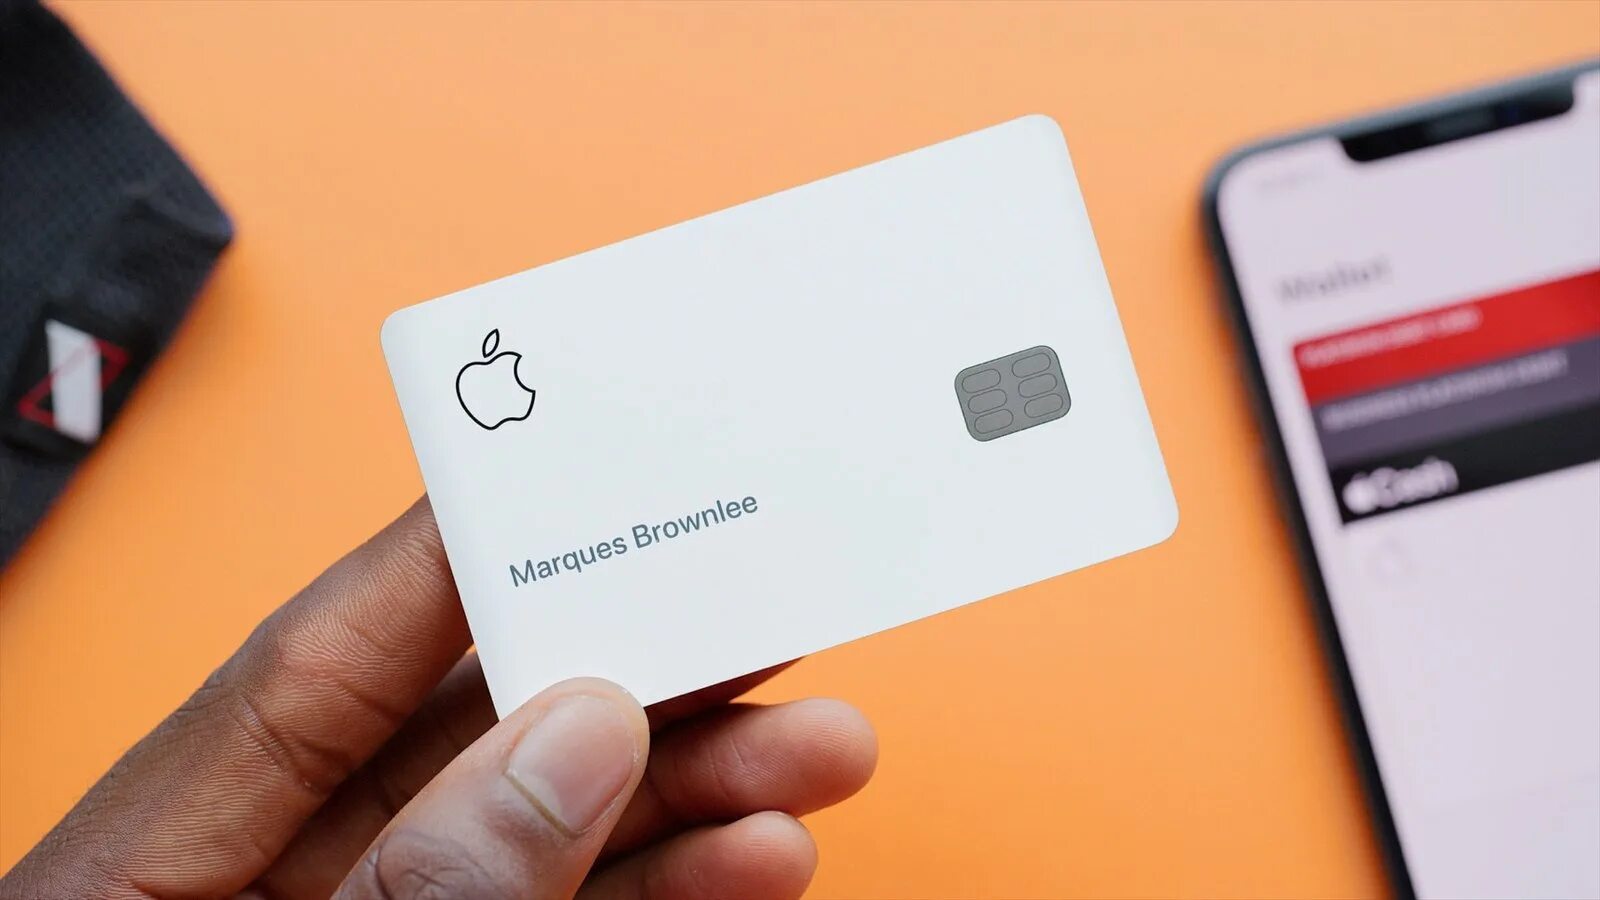 Банковская карта на айфон. Apple Card Goldman sachs. Карта Эппл. Кредитка эпл. Apple пластиковая карта.